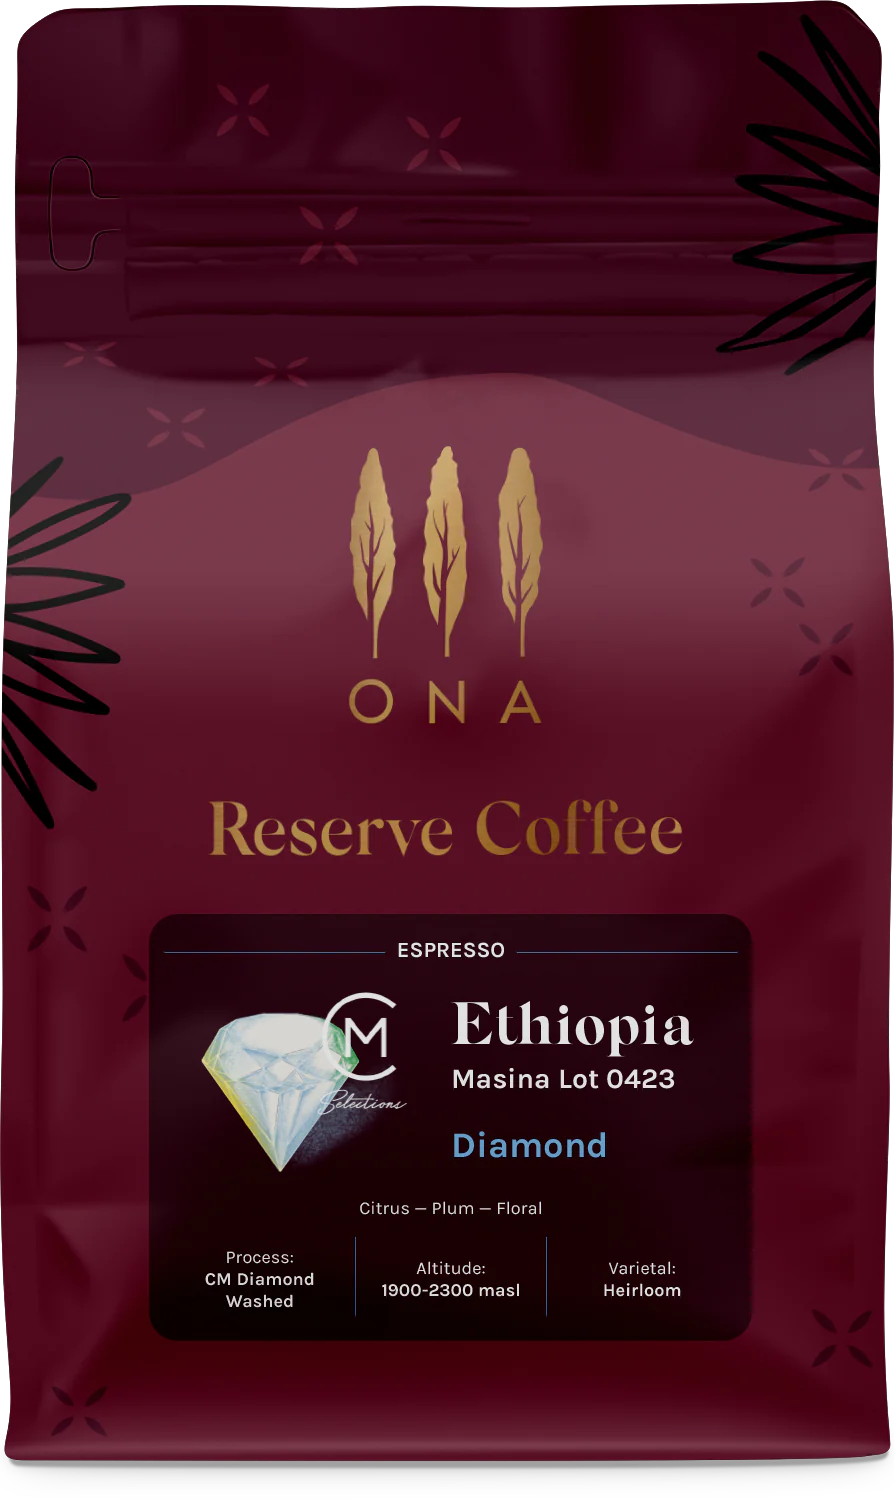 ONA COFFEE ESPRESSO ETHIOPIA MASINA LOT 0423, CM DIAMOND WASHED